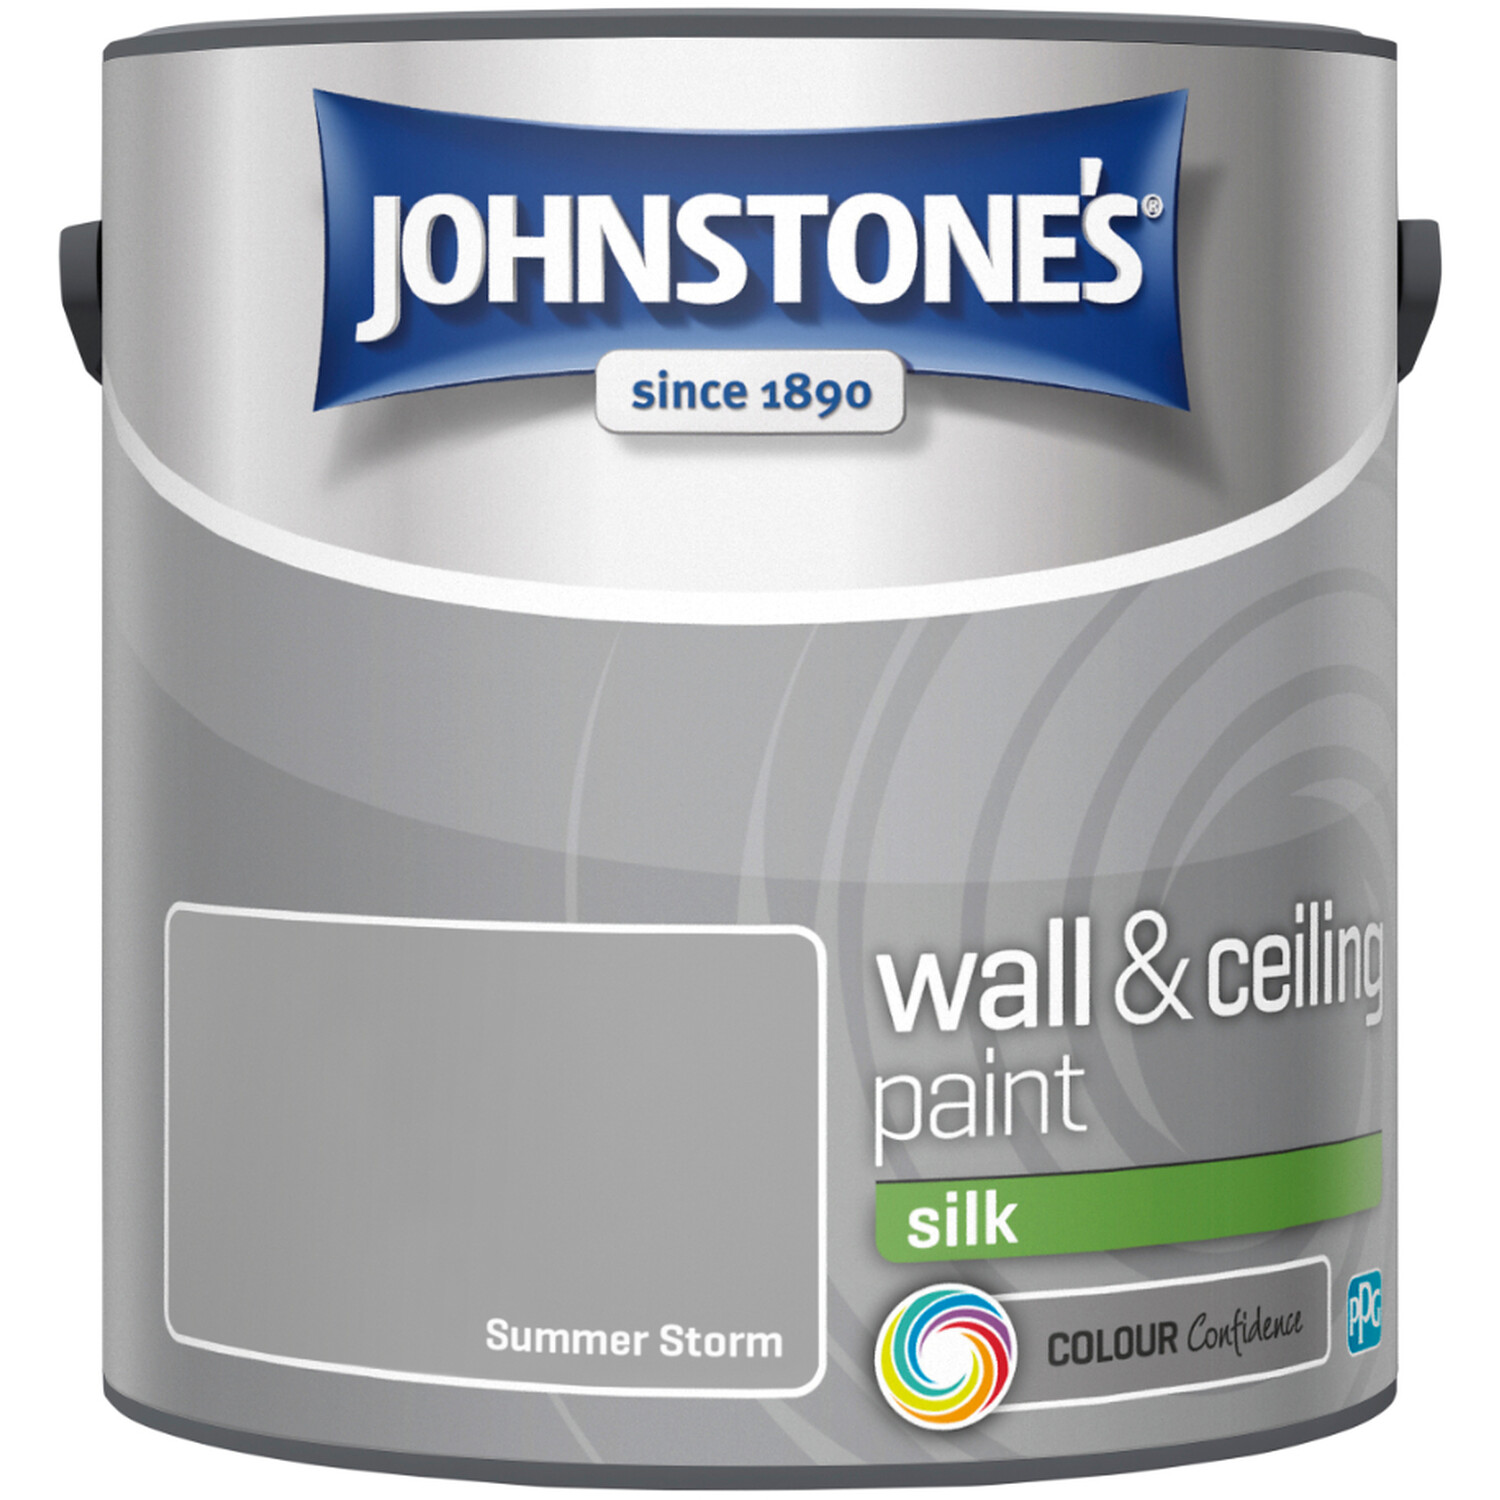 Johnstones Silk Emulsion Paint - Summer Storm Image 2